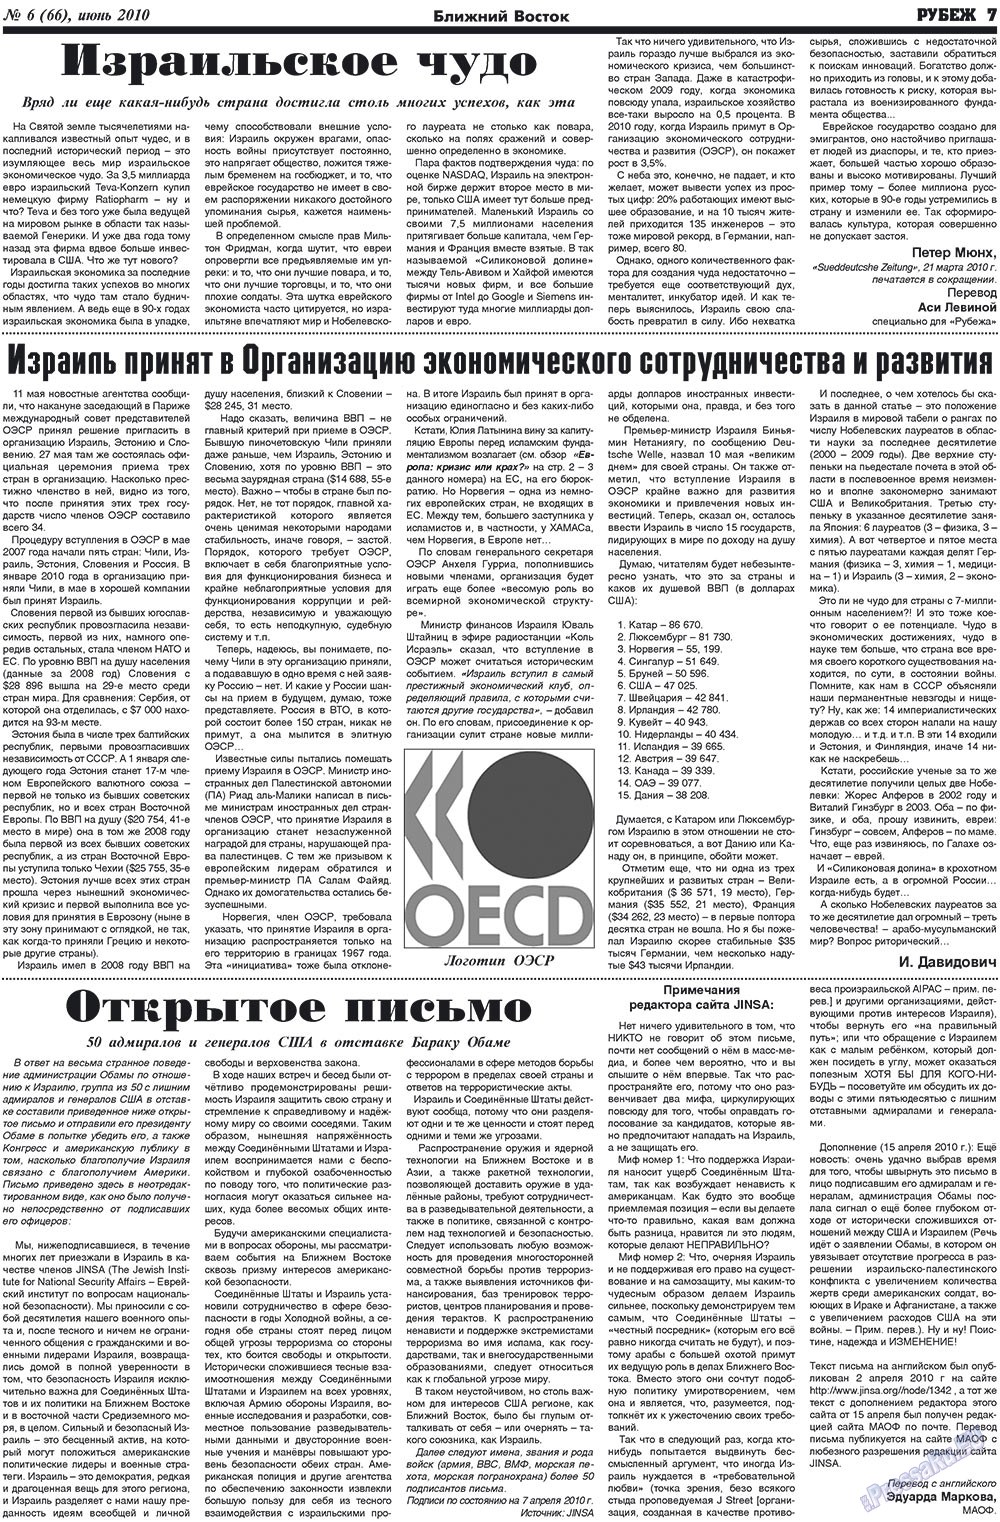 Рубеж, газета. 2010 №6 стр.7